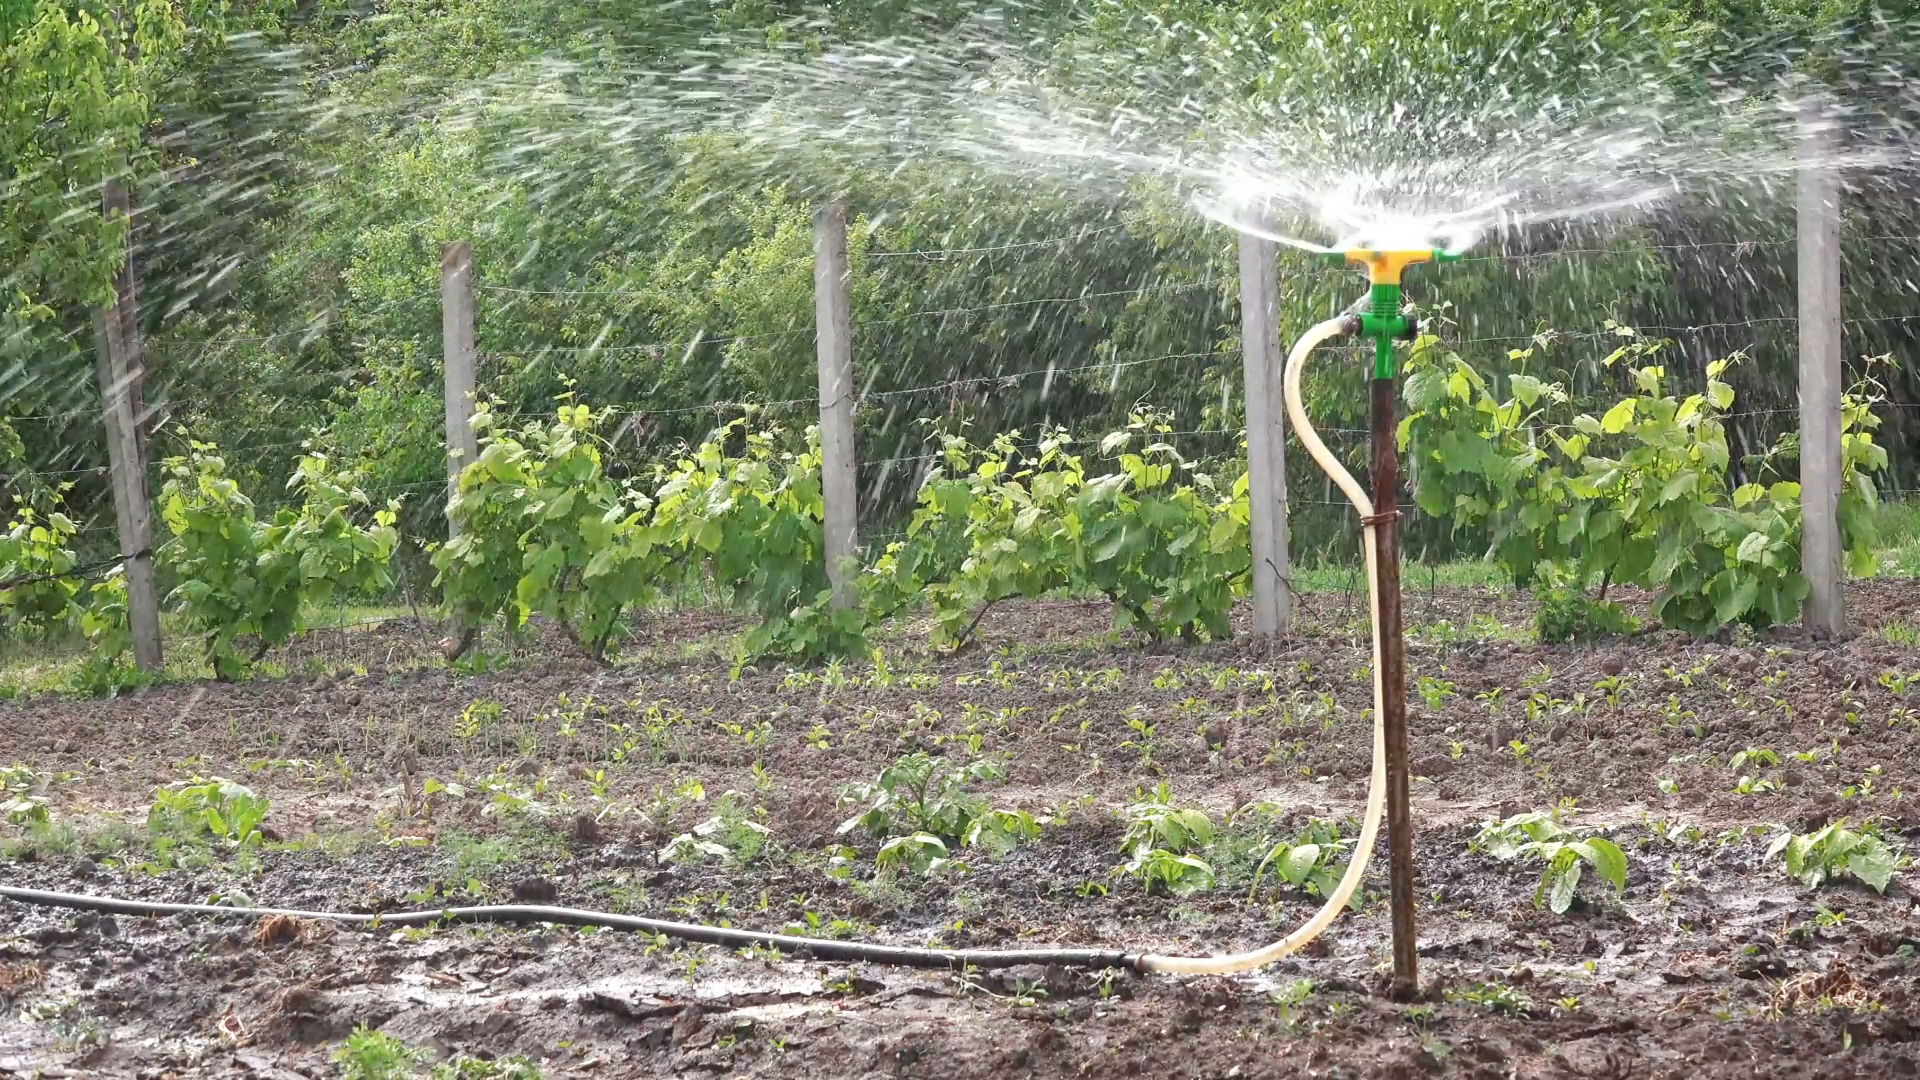 Irrigation Sprinkler Watering Vegetable Garden, Irrigating ...